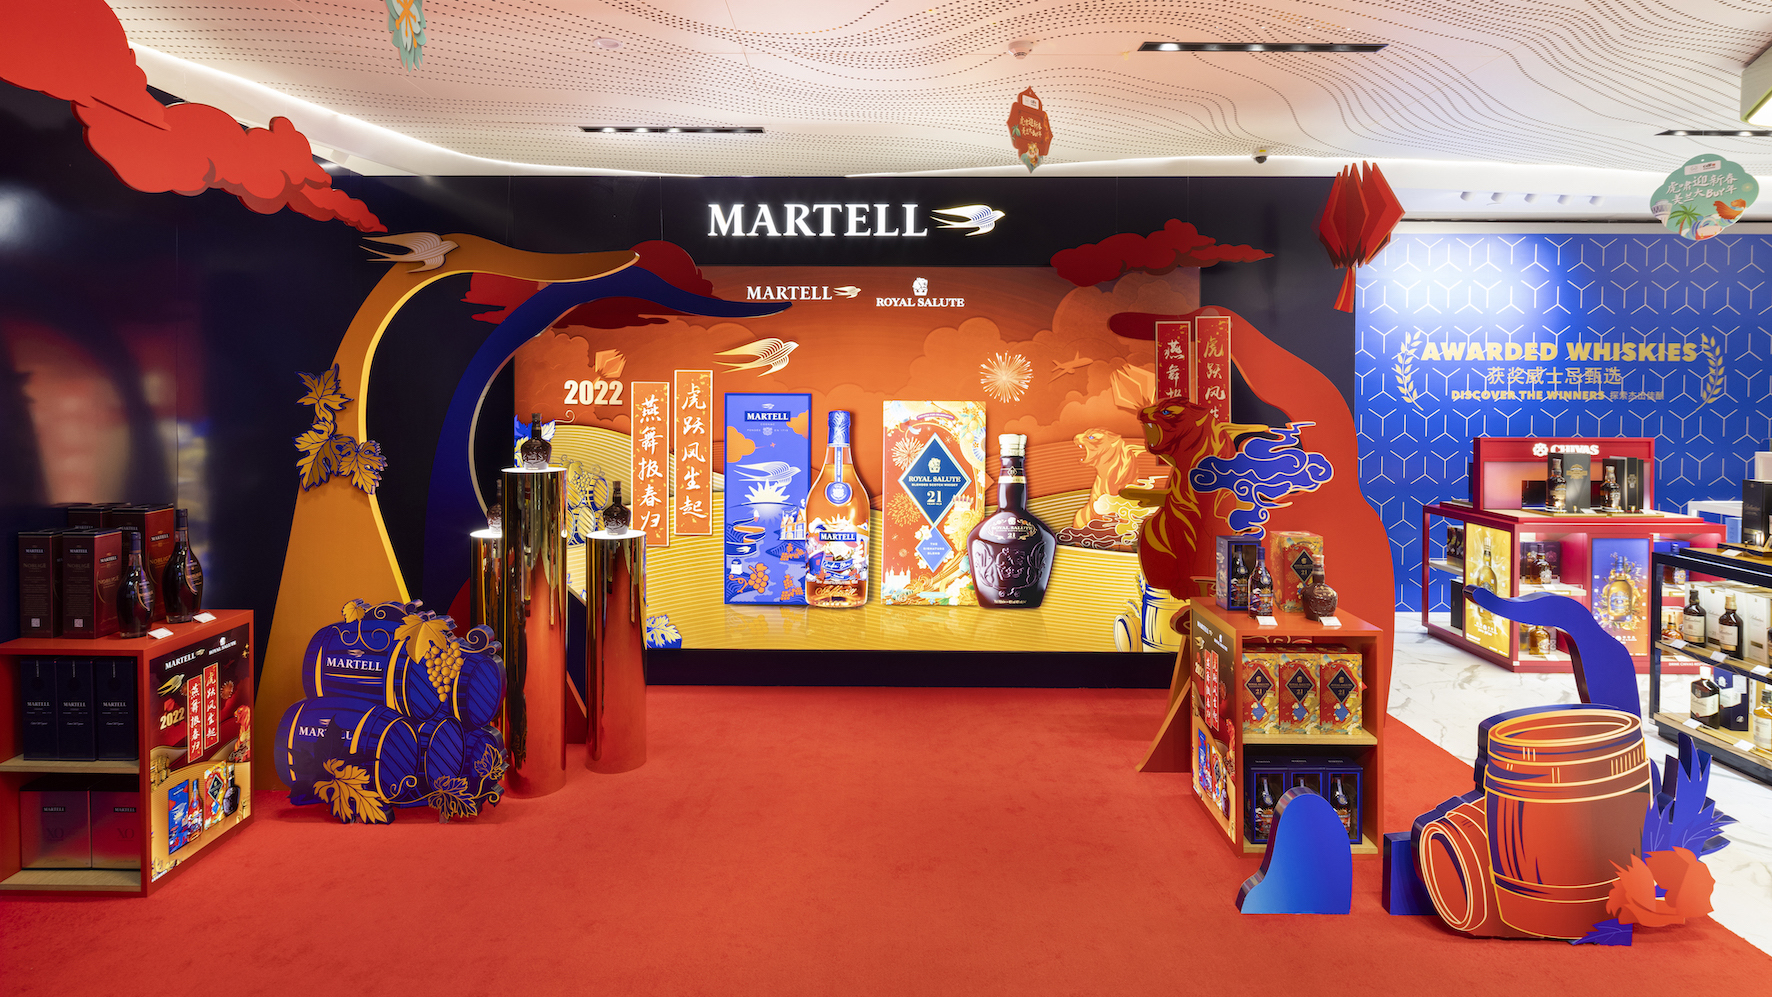 Martell Cordon Bleu The Audacious Voyage interior shop